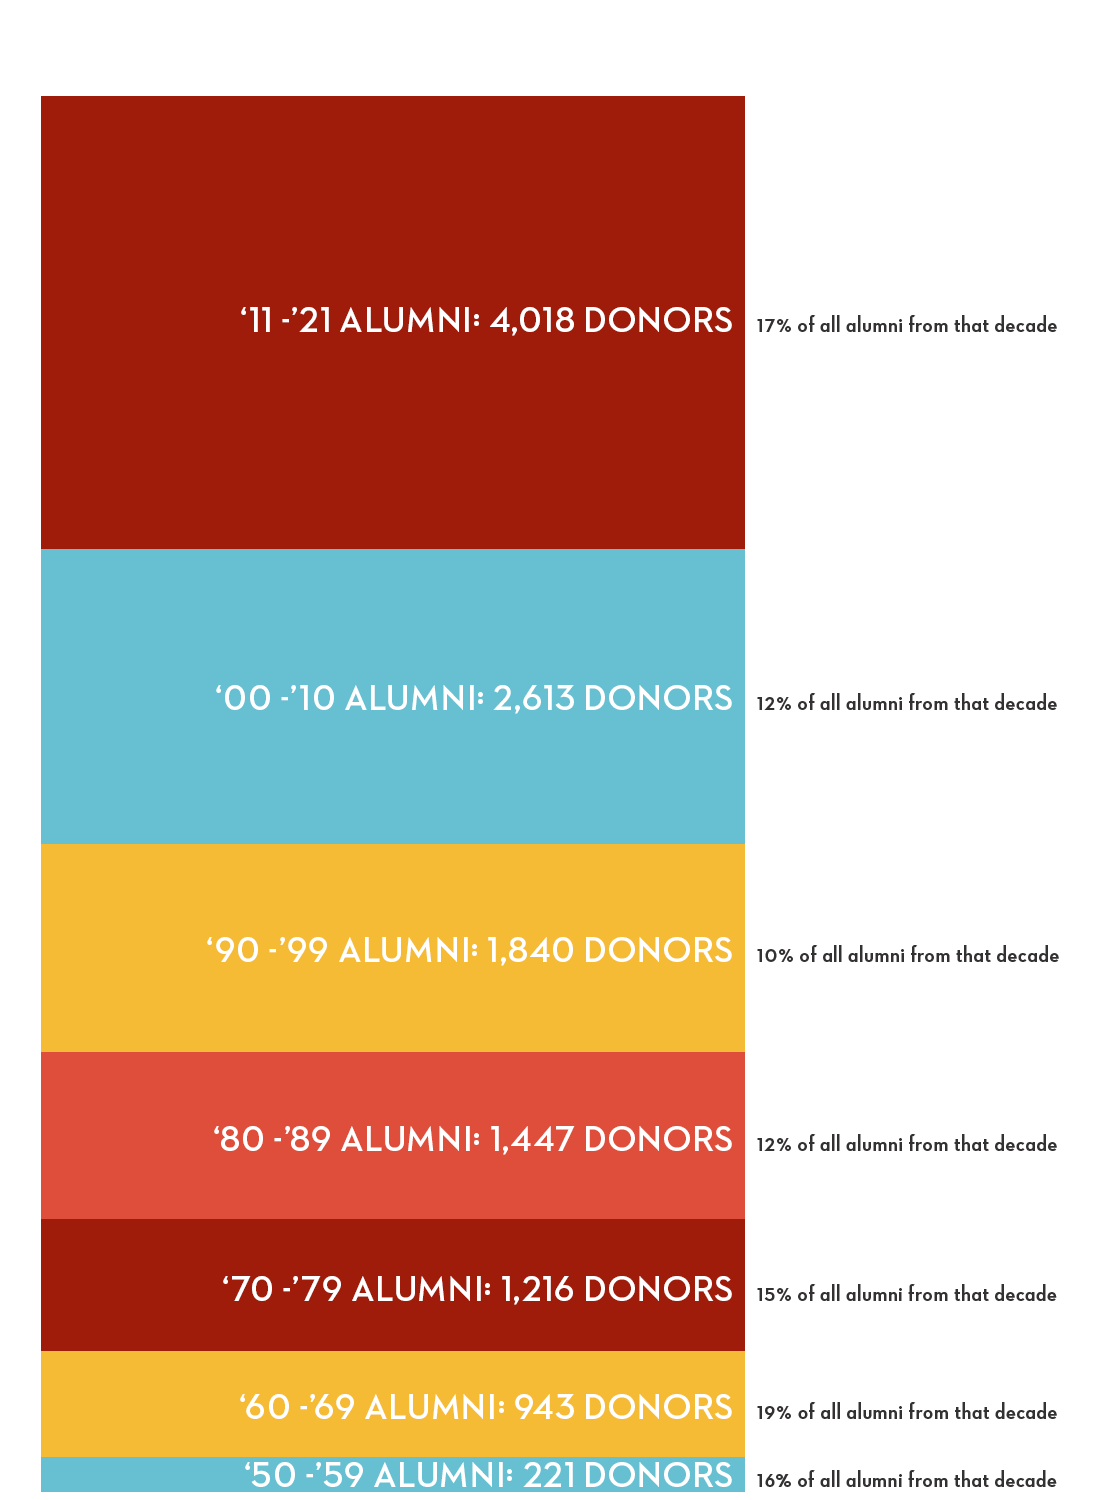 alumni chart